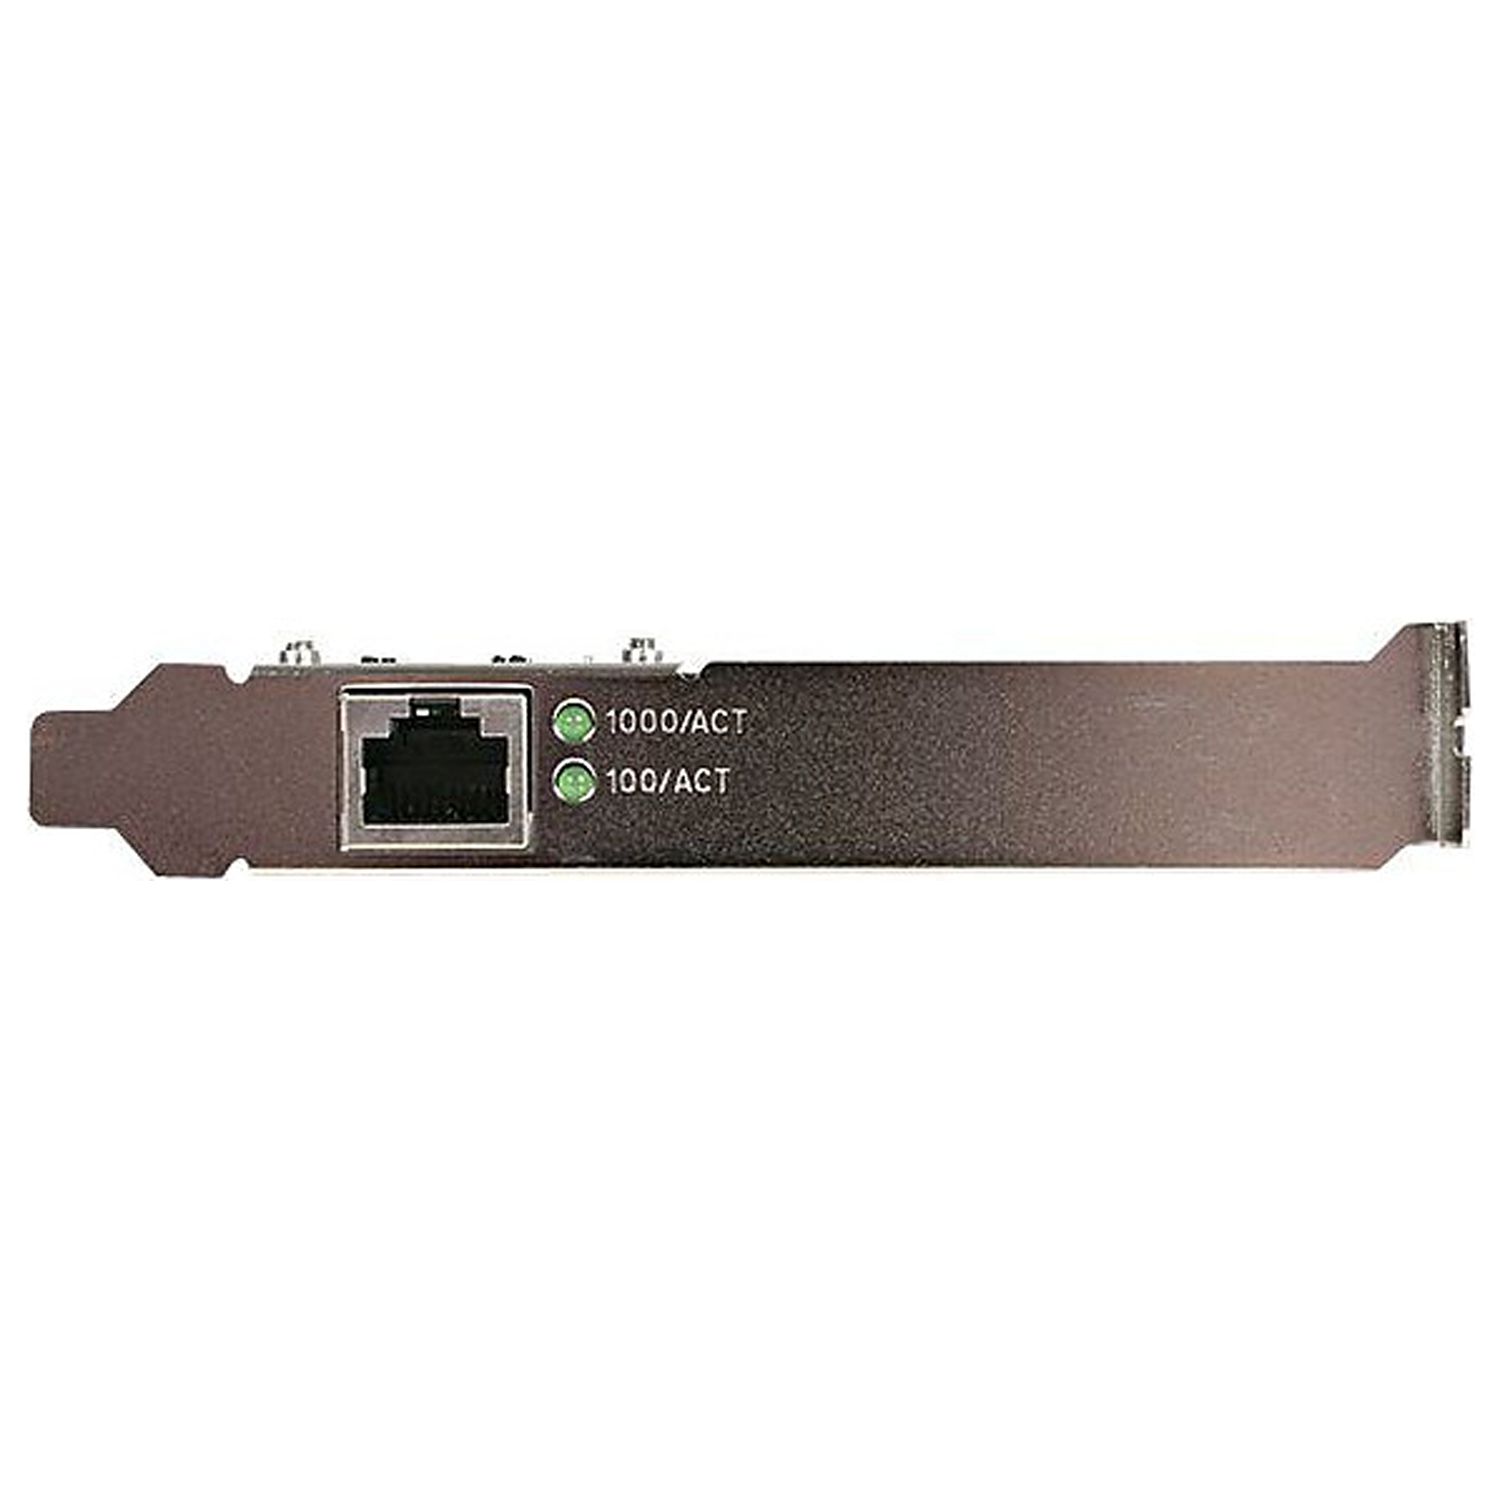 StarTech.com 1 Port PCI 10/100/1000 32 Bit Gigabit Ethernet Network Adapter Card - image 3 of 4